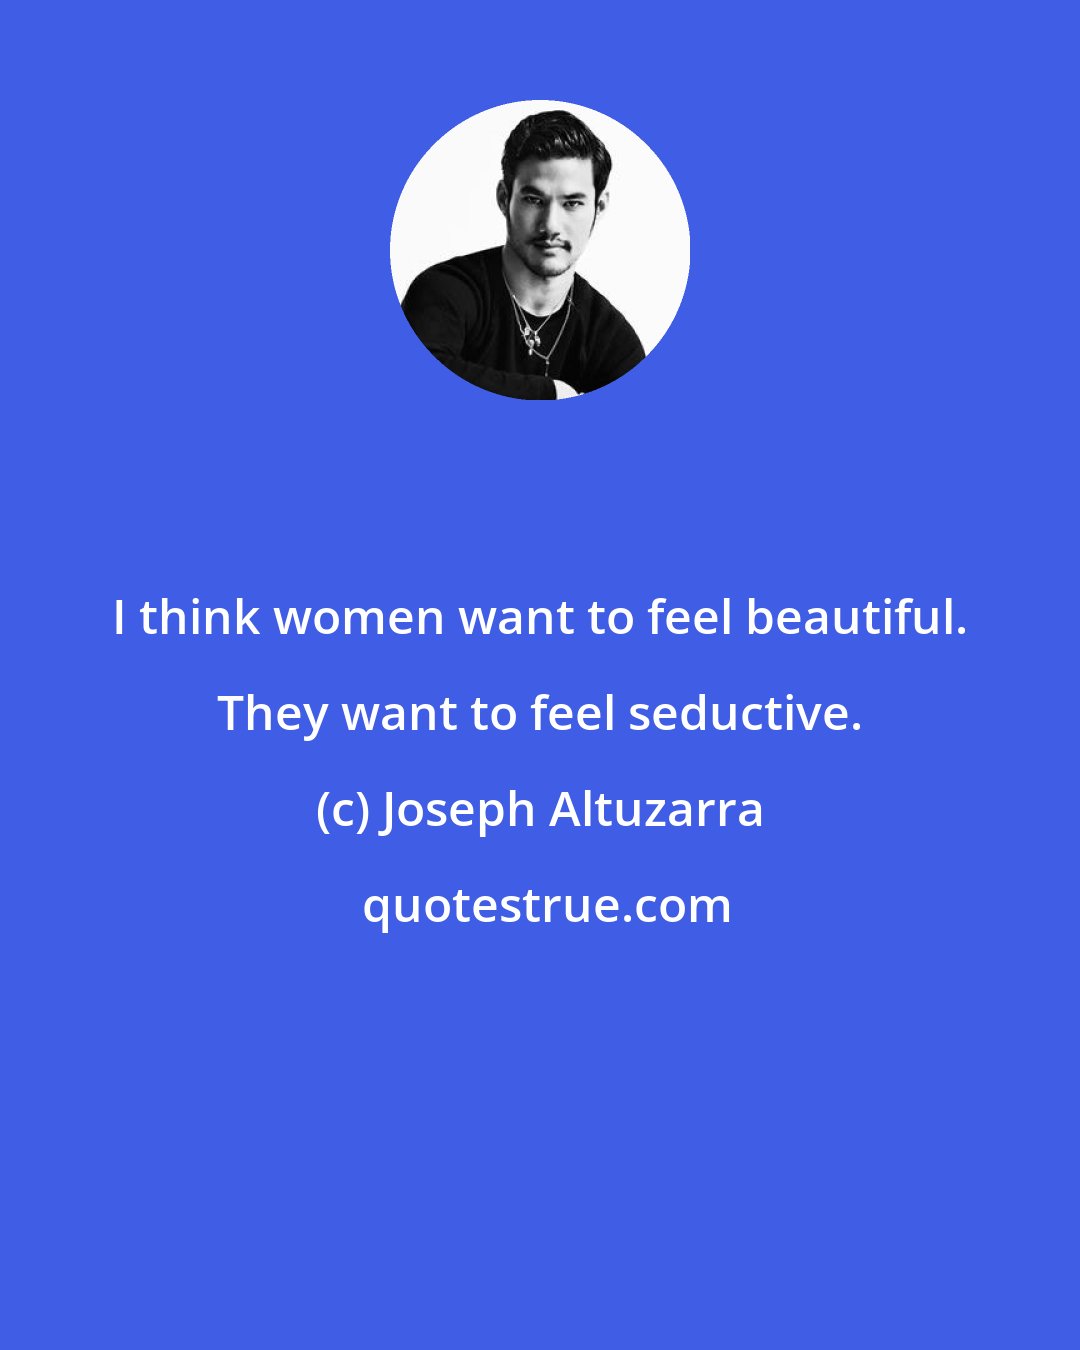 Joseph Altuzarra: I think women want to feel beautiful. They want to feel seductive.